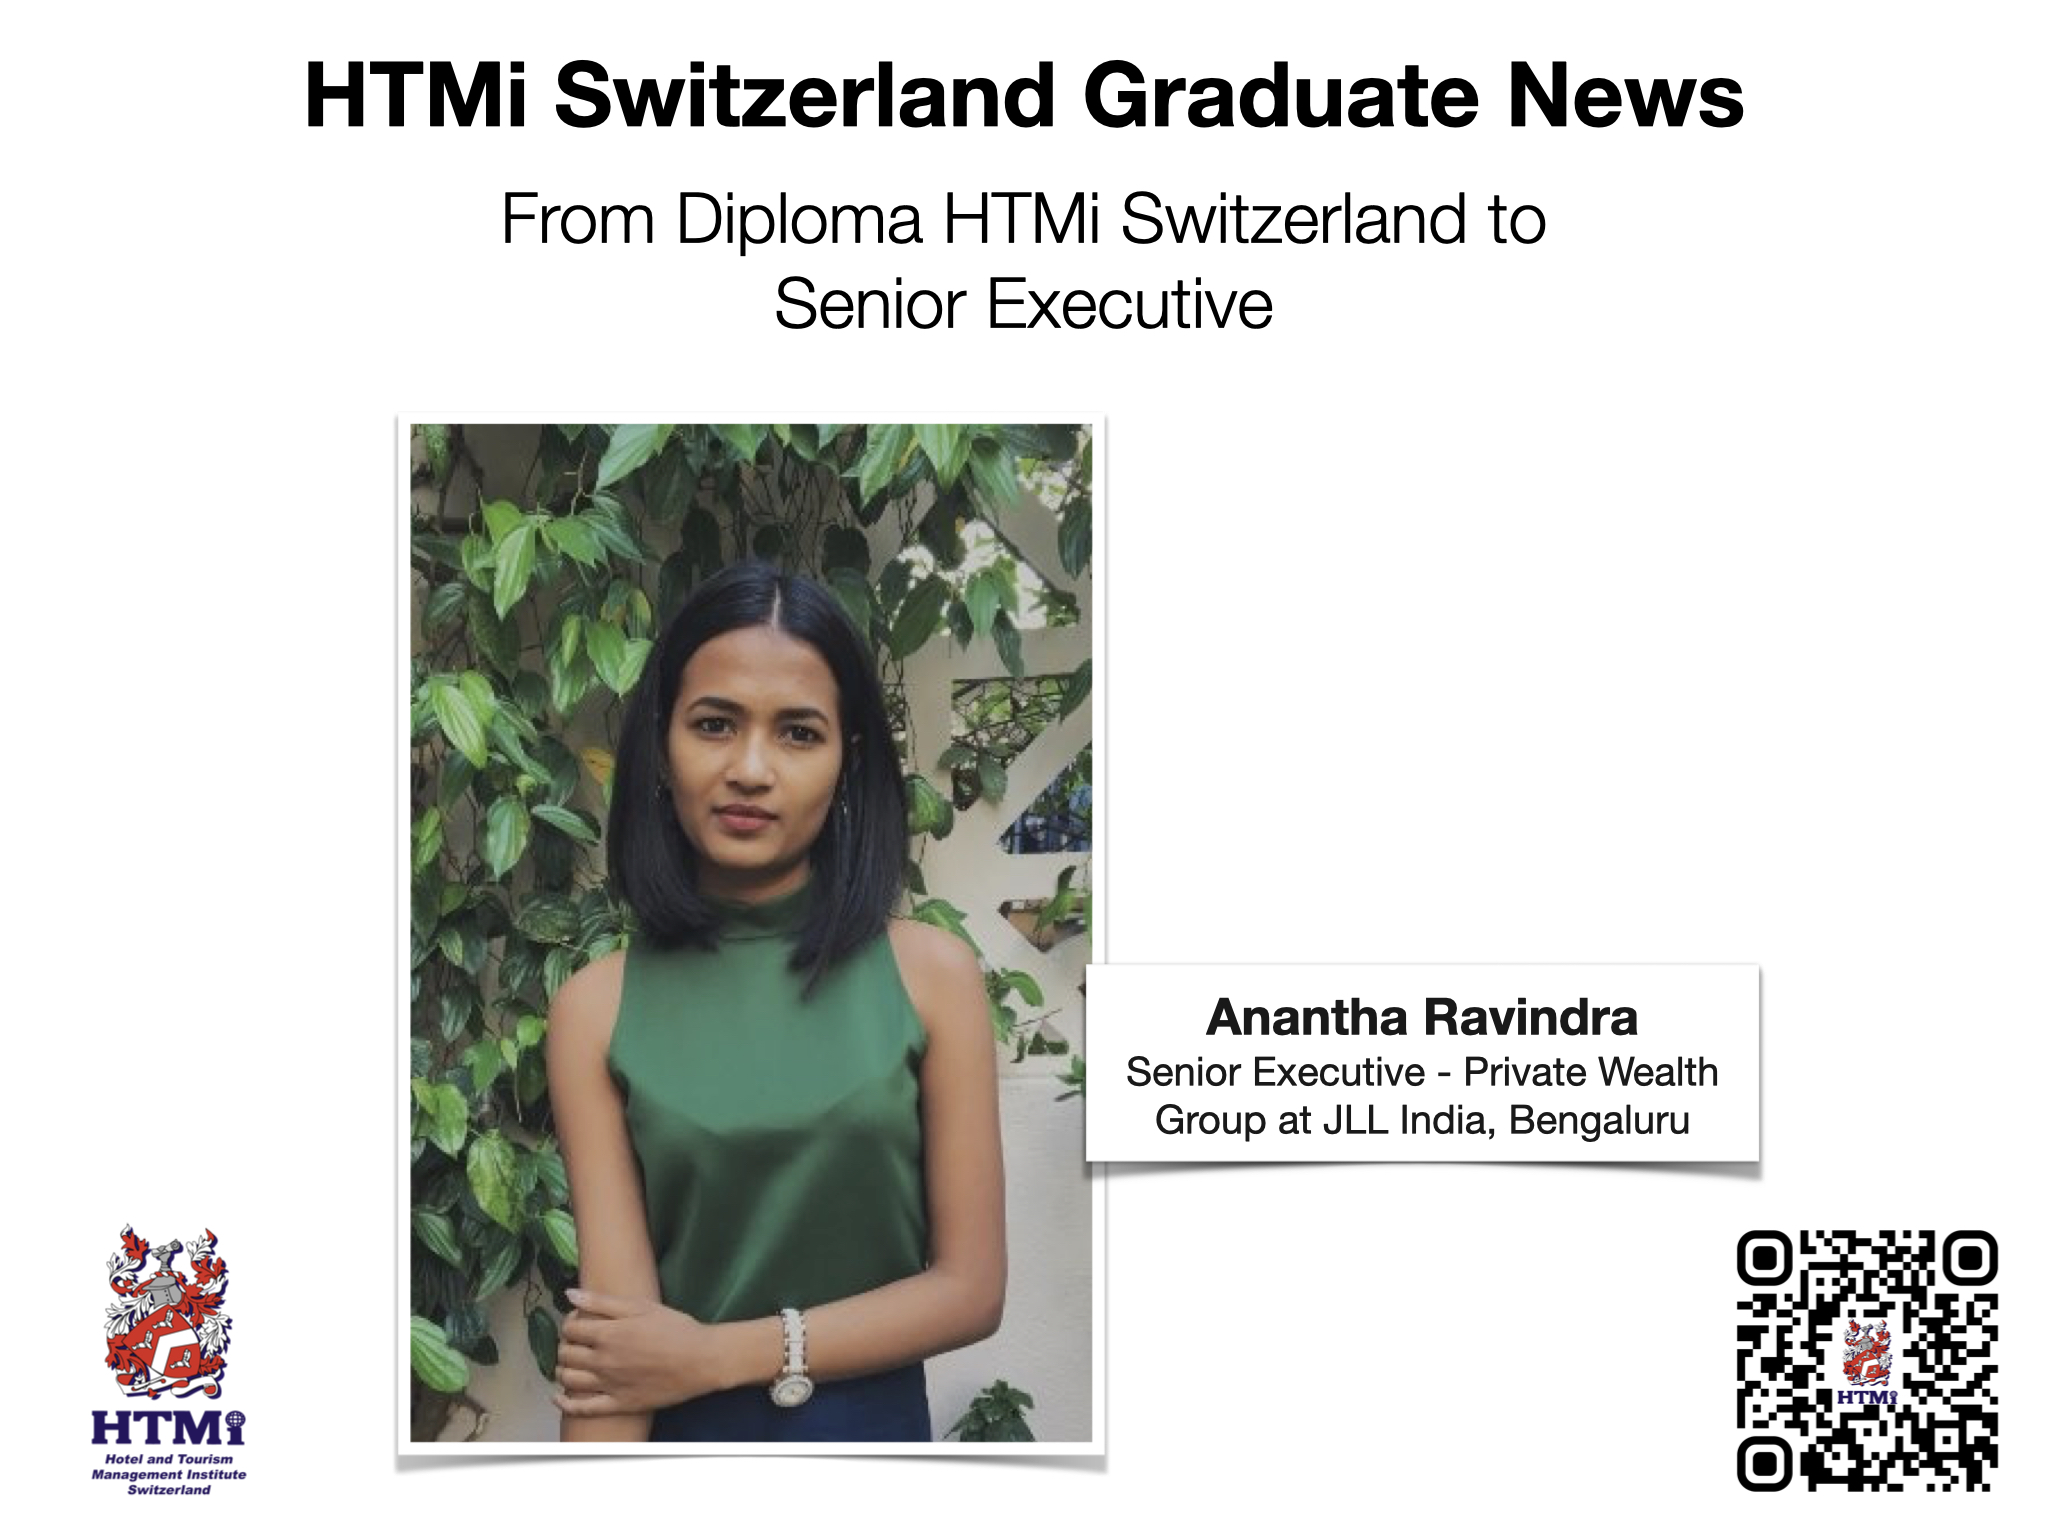 Anantha Ravindra - From Diploma HTMi Switzerland to Senior Executive - HTMi Switzerland Graduate News